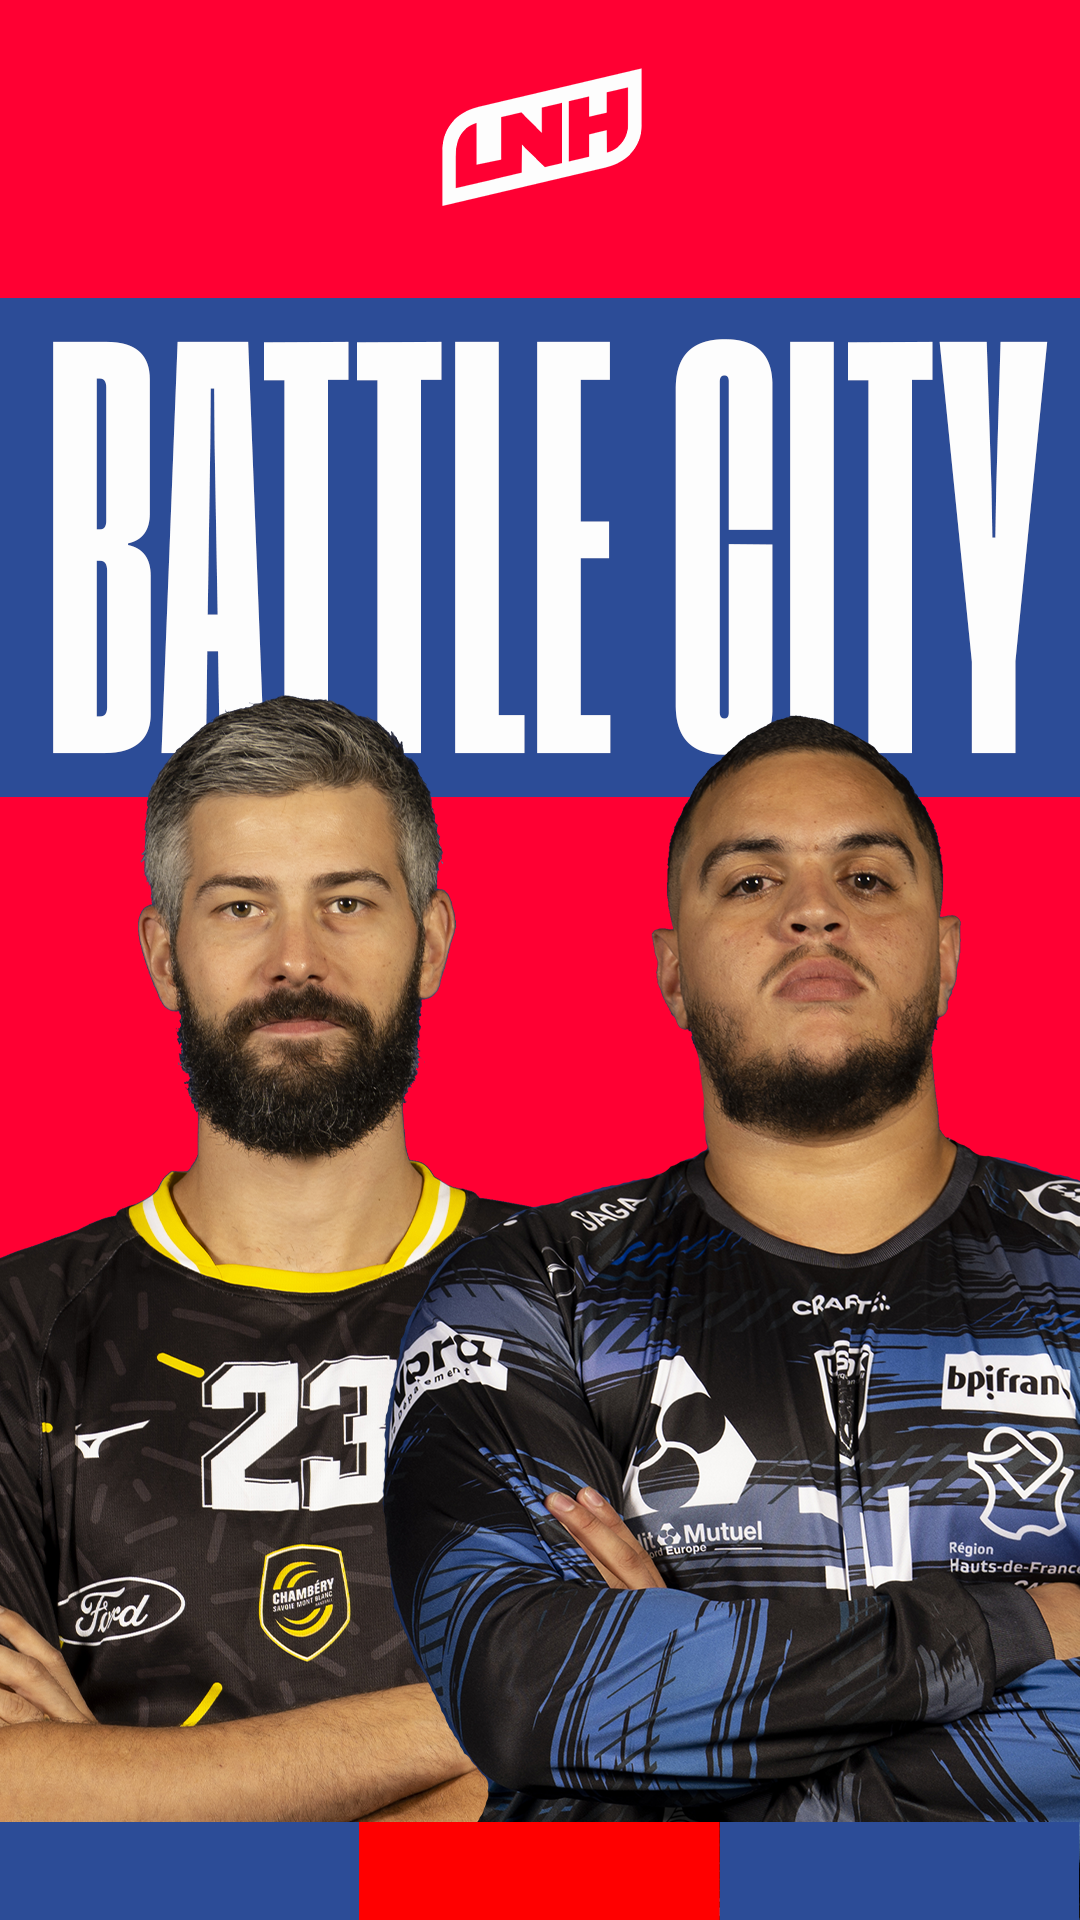 #BattleCity | Dunkerque vs Chambéry